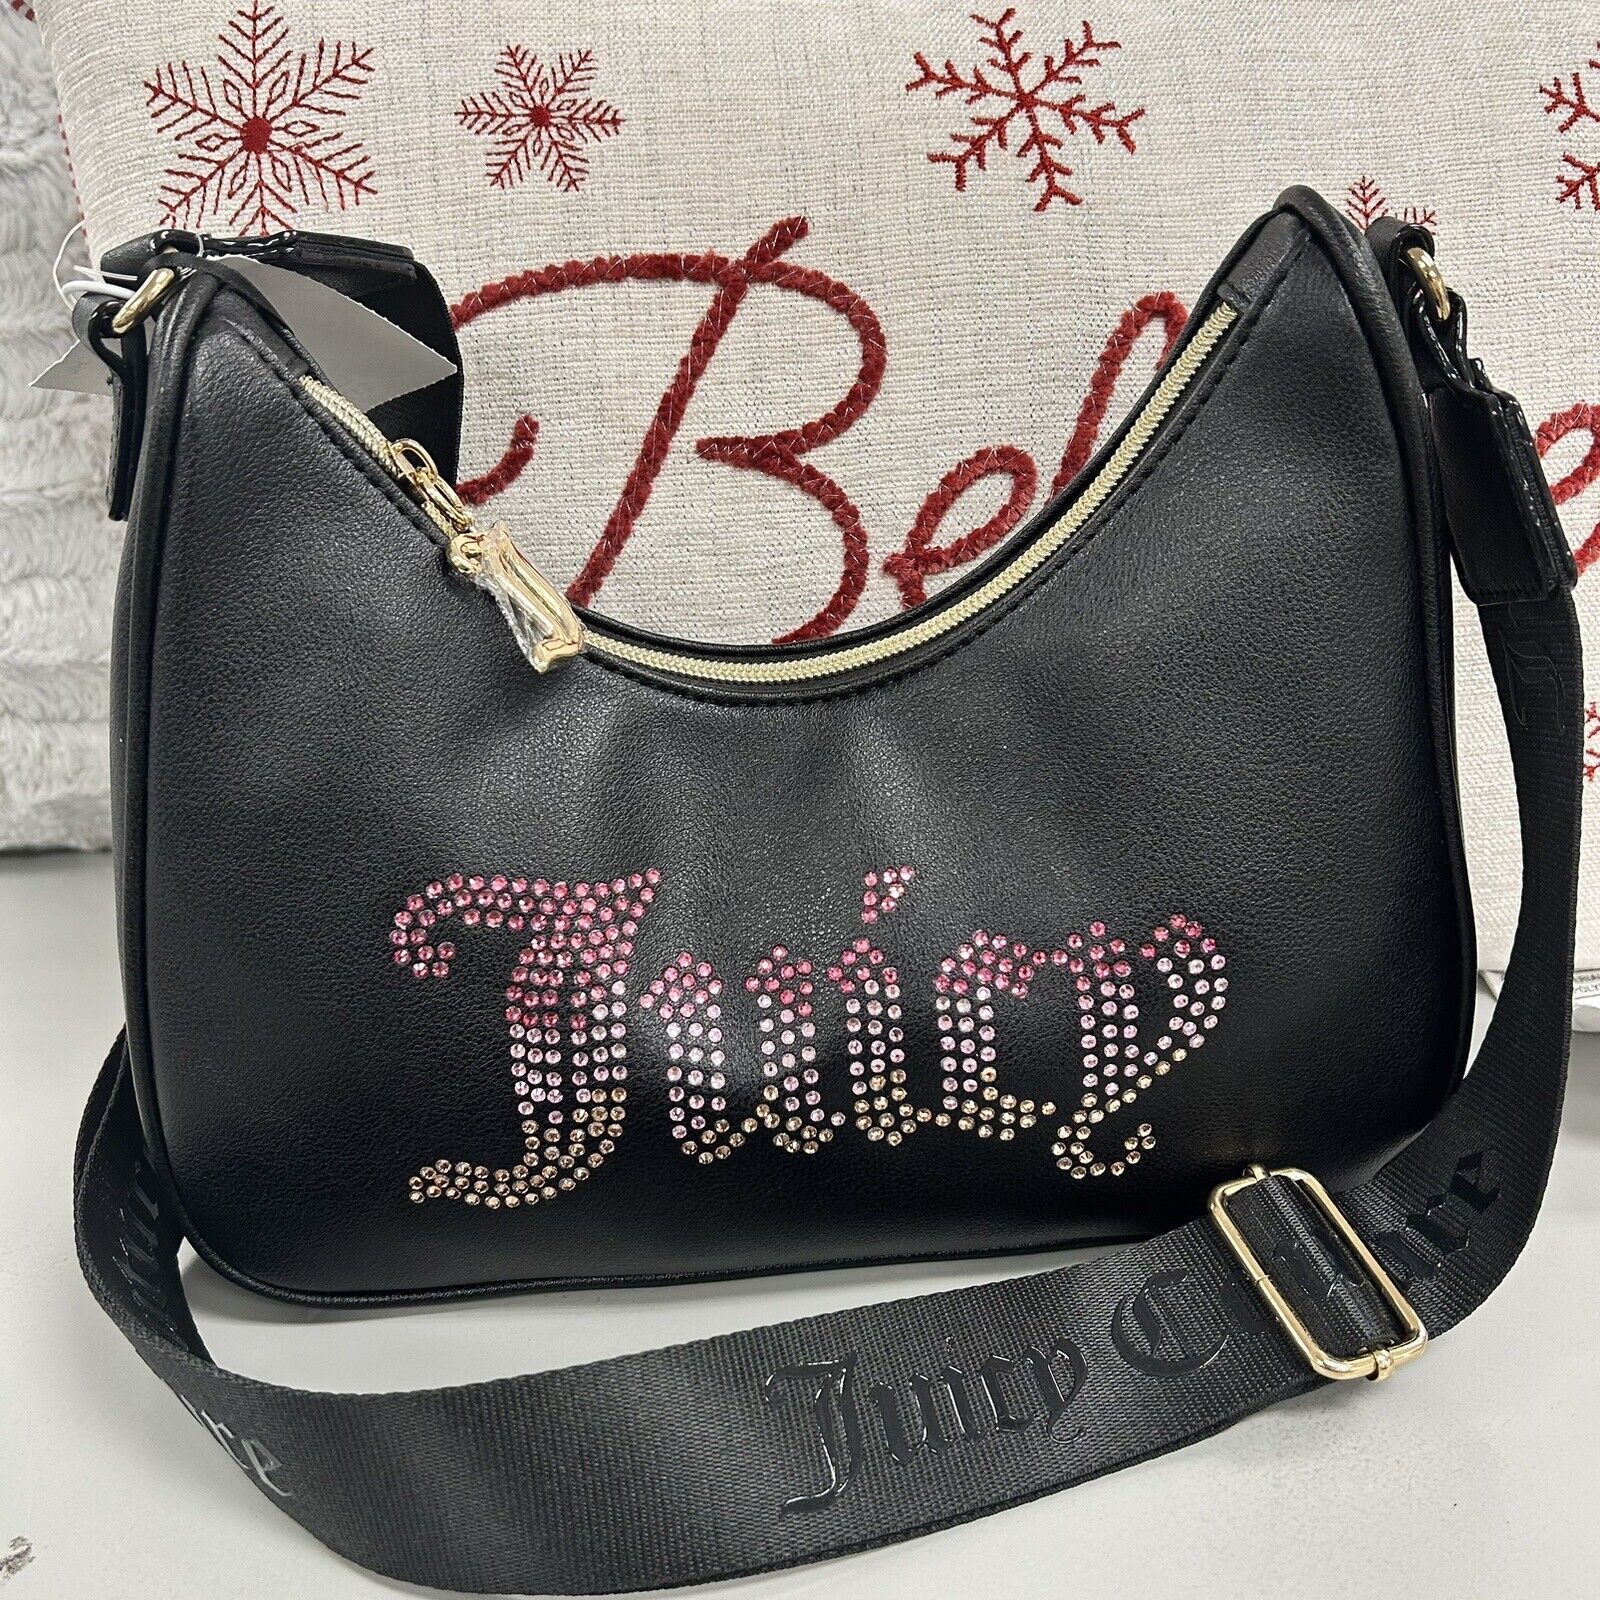 Juicy Couture Rhinestone Bling Black Crossbody Bag  | eBay | eBay US